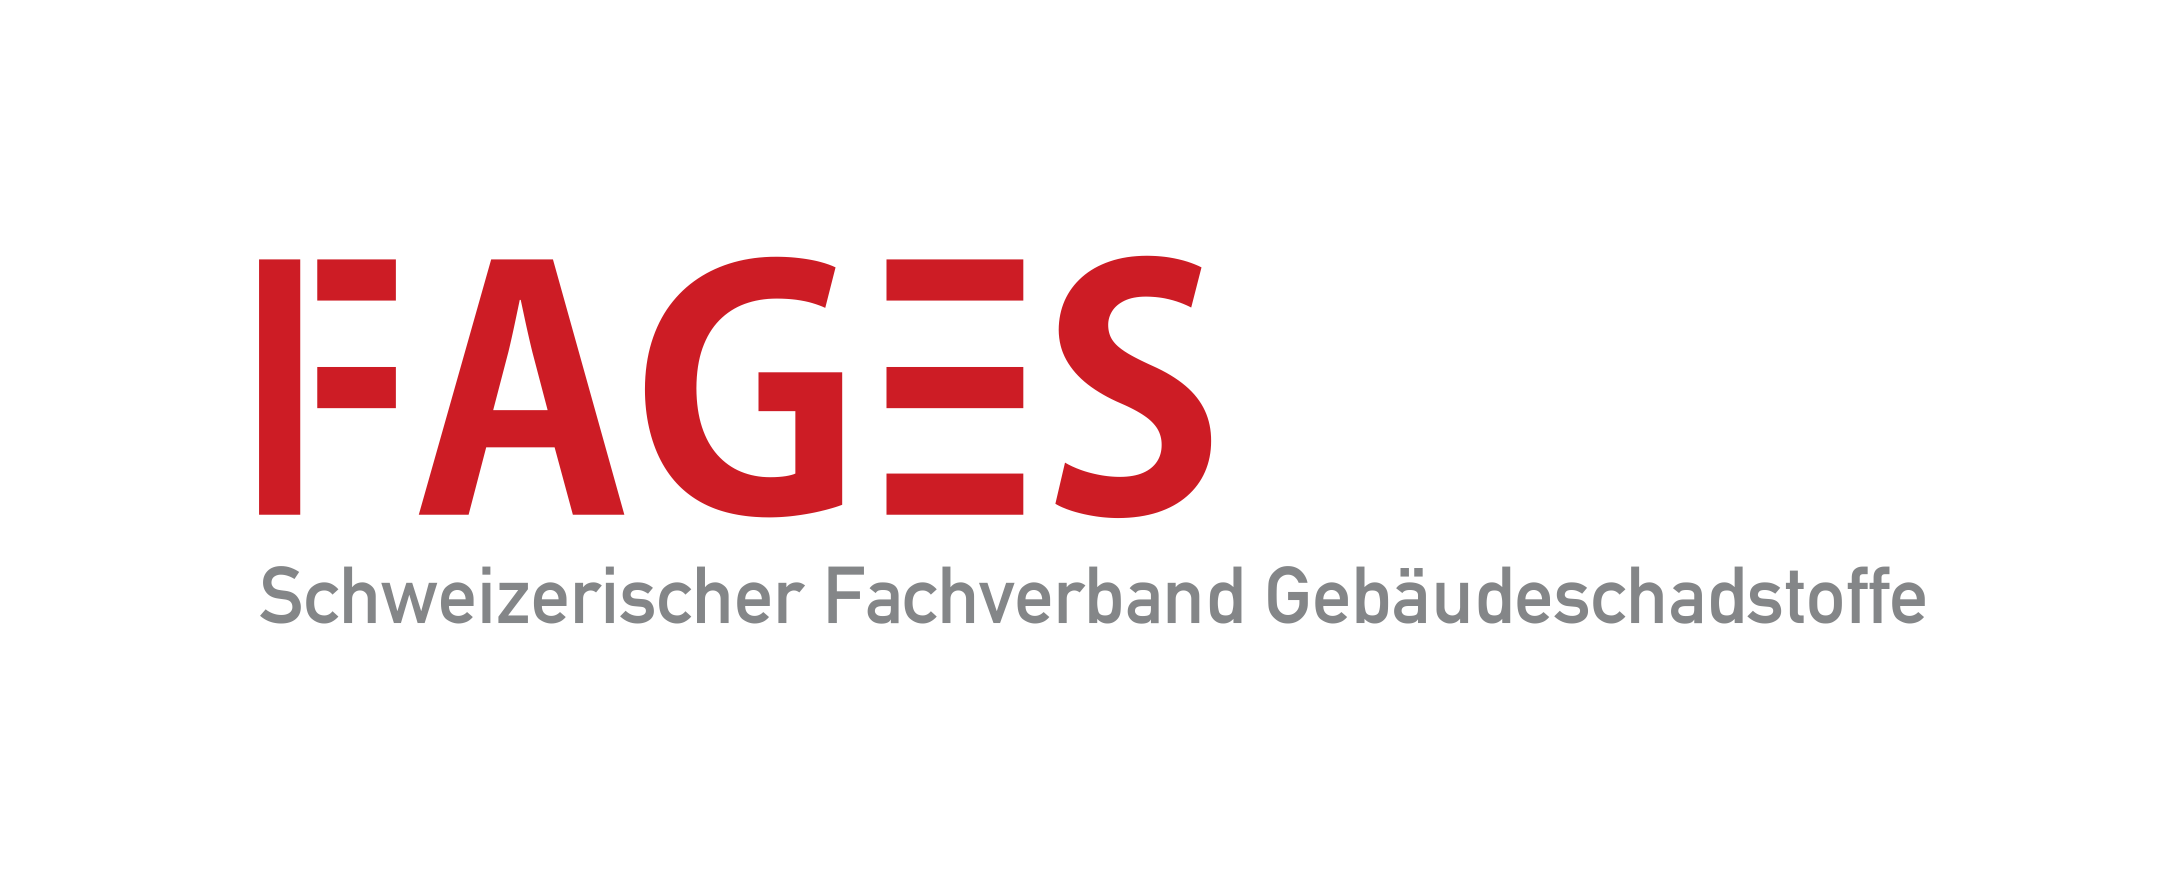 FAGES, Fachverband Gebäudeschadstoffe Schweiz